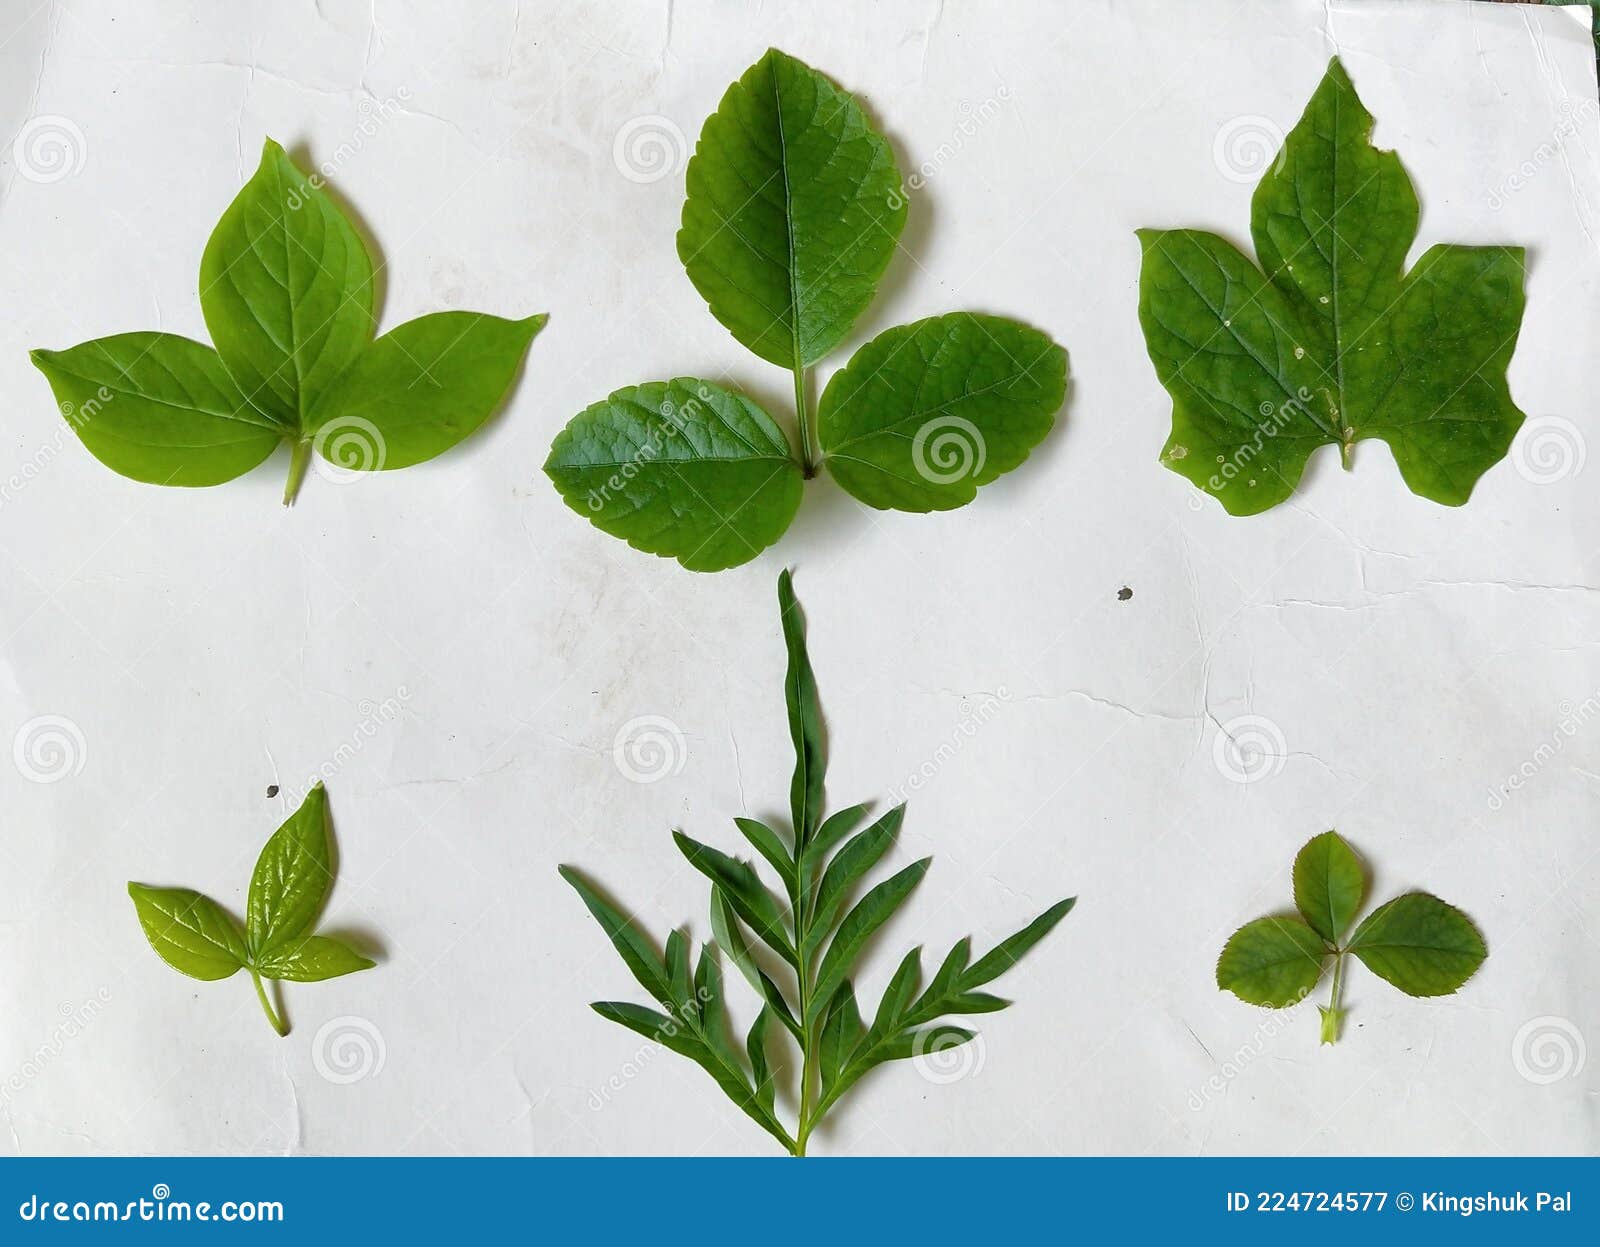 green leaf collation,